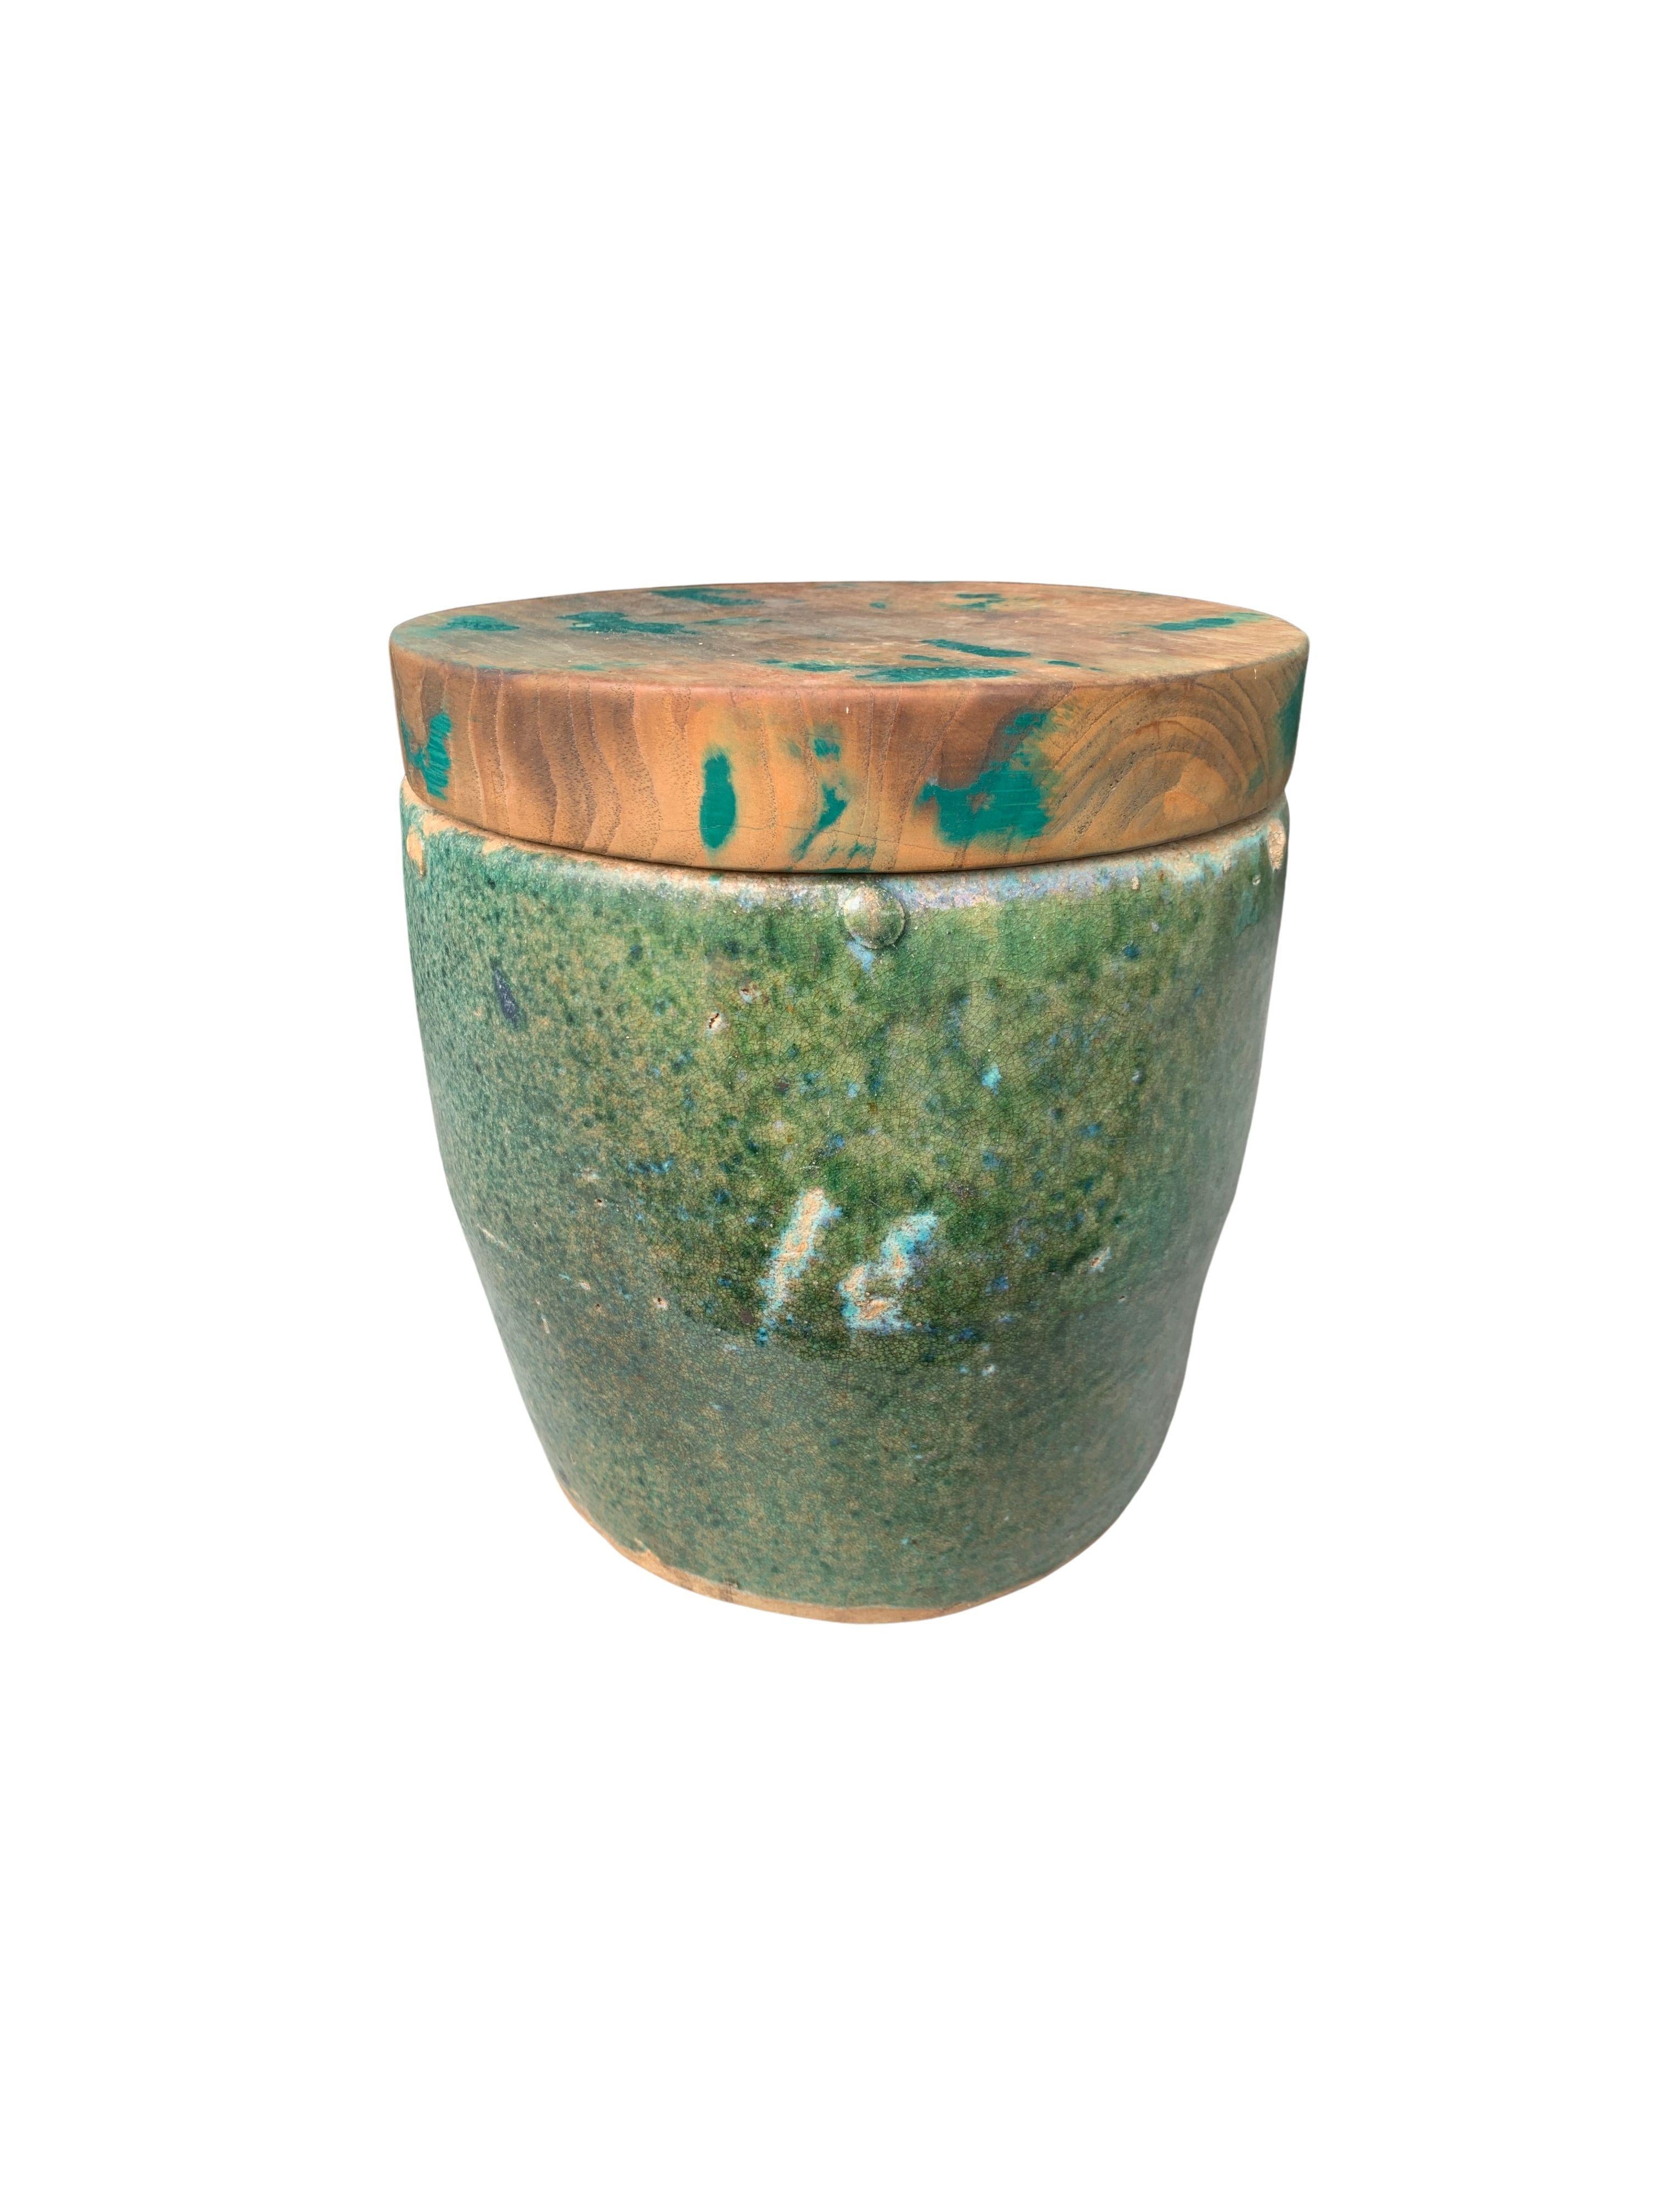 Chinese Shiwan Green Glazed Ceramic Jar / Planter, c. 1900 For Sale 1